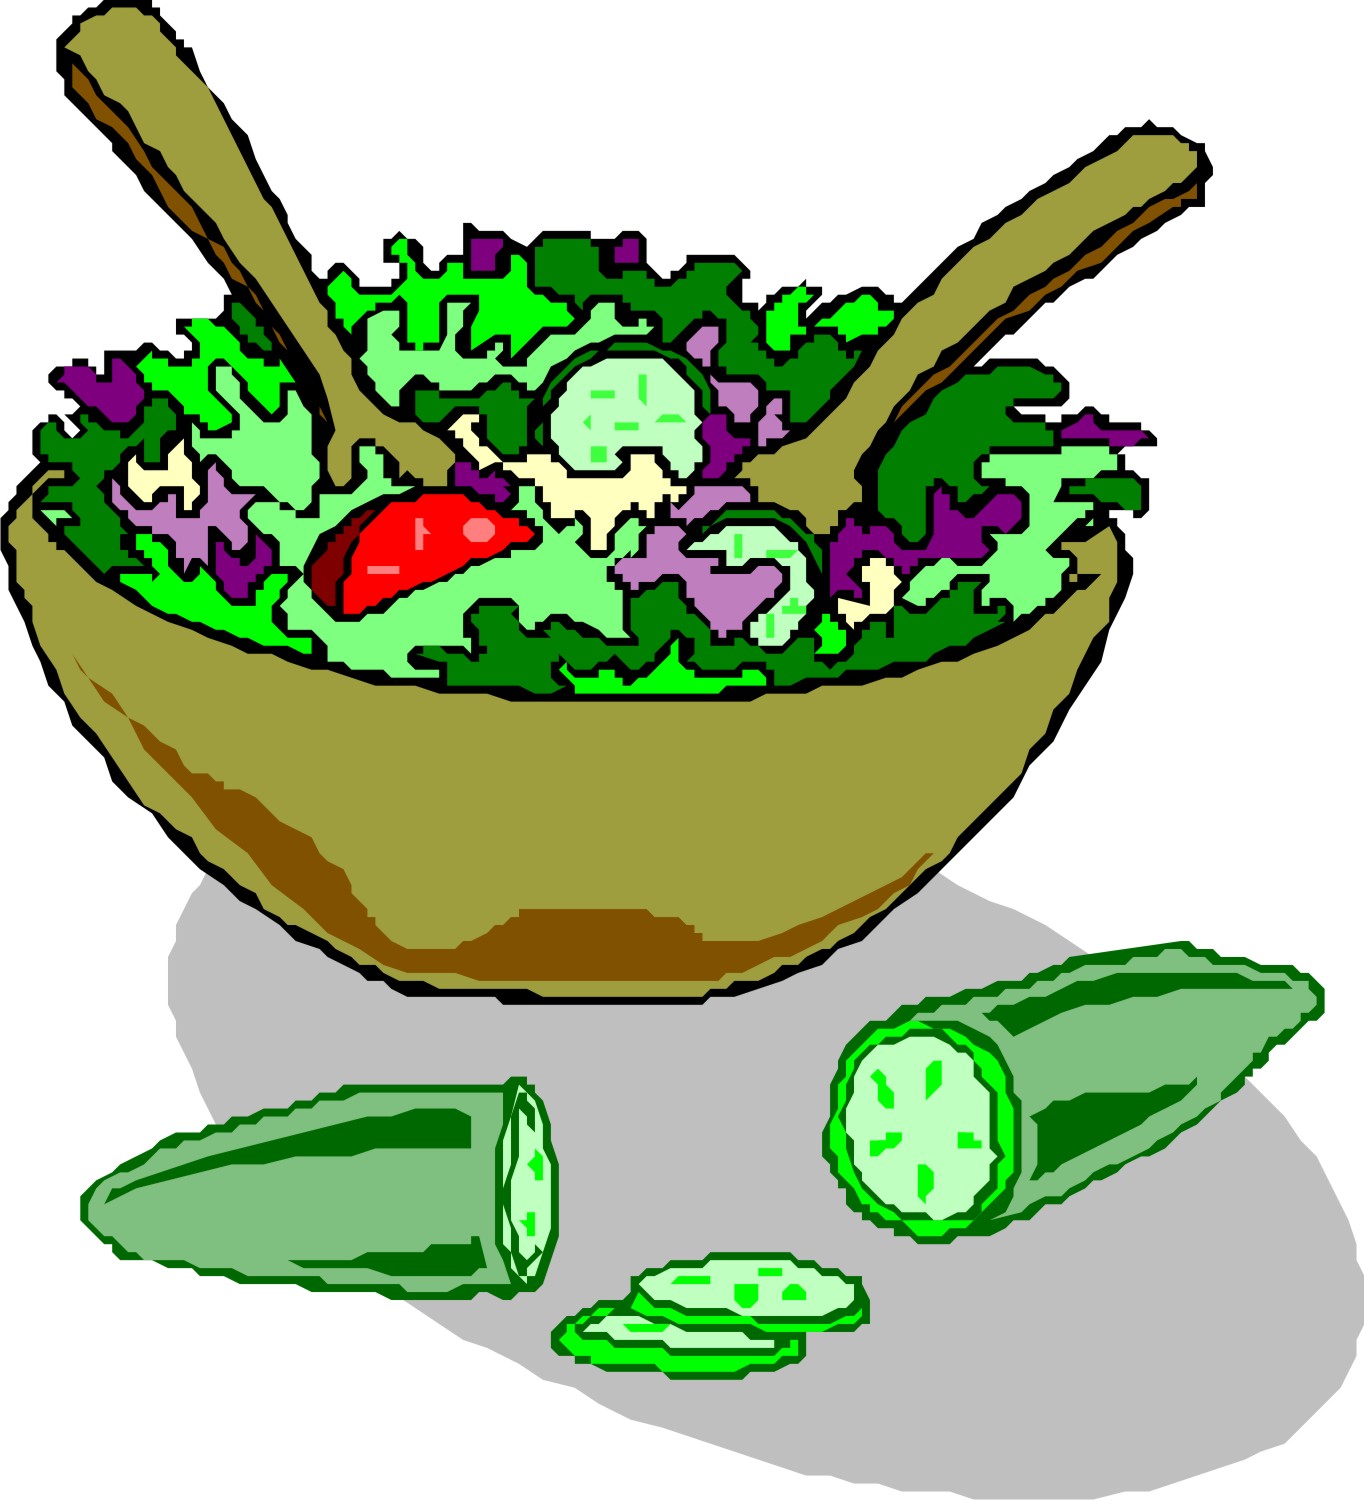 Salad bar clipart free images 3